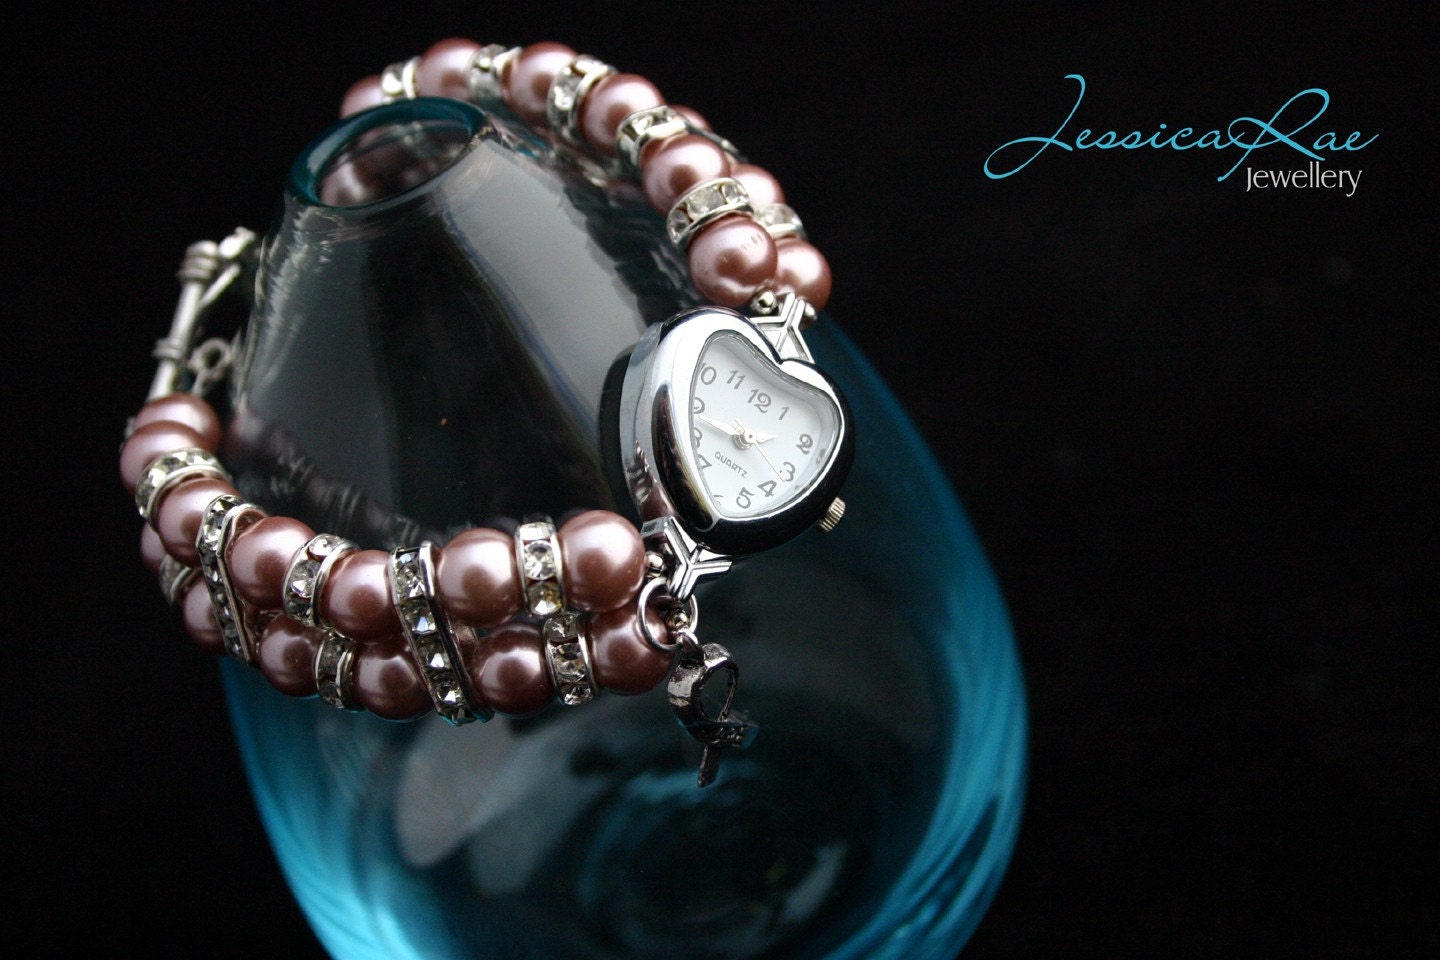 Jessica Rae Jewellery watch